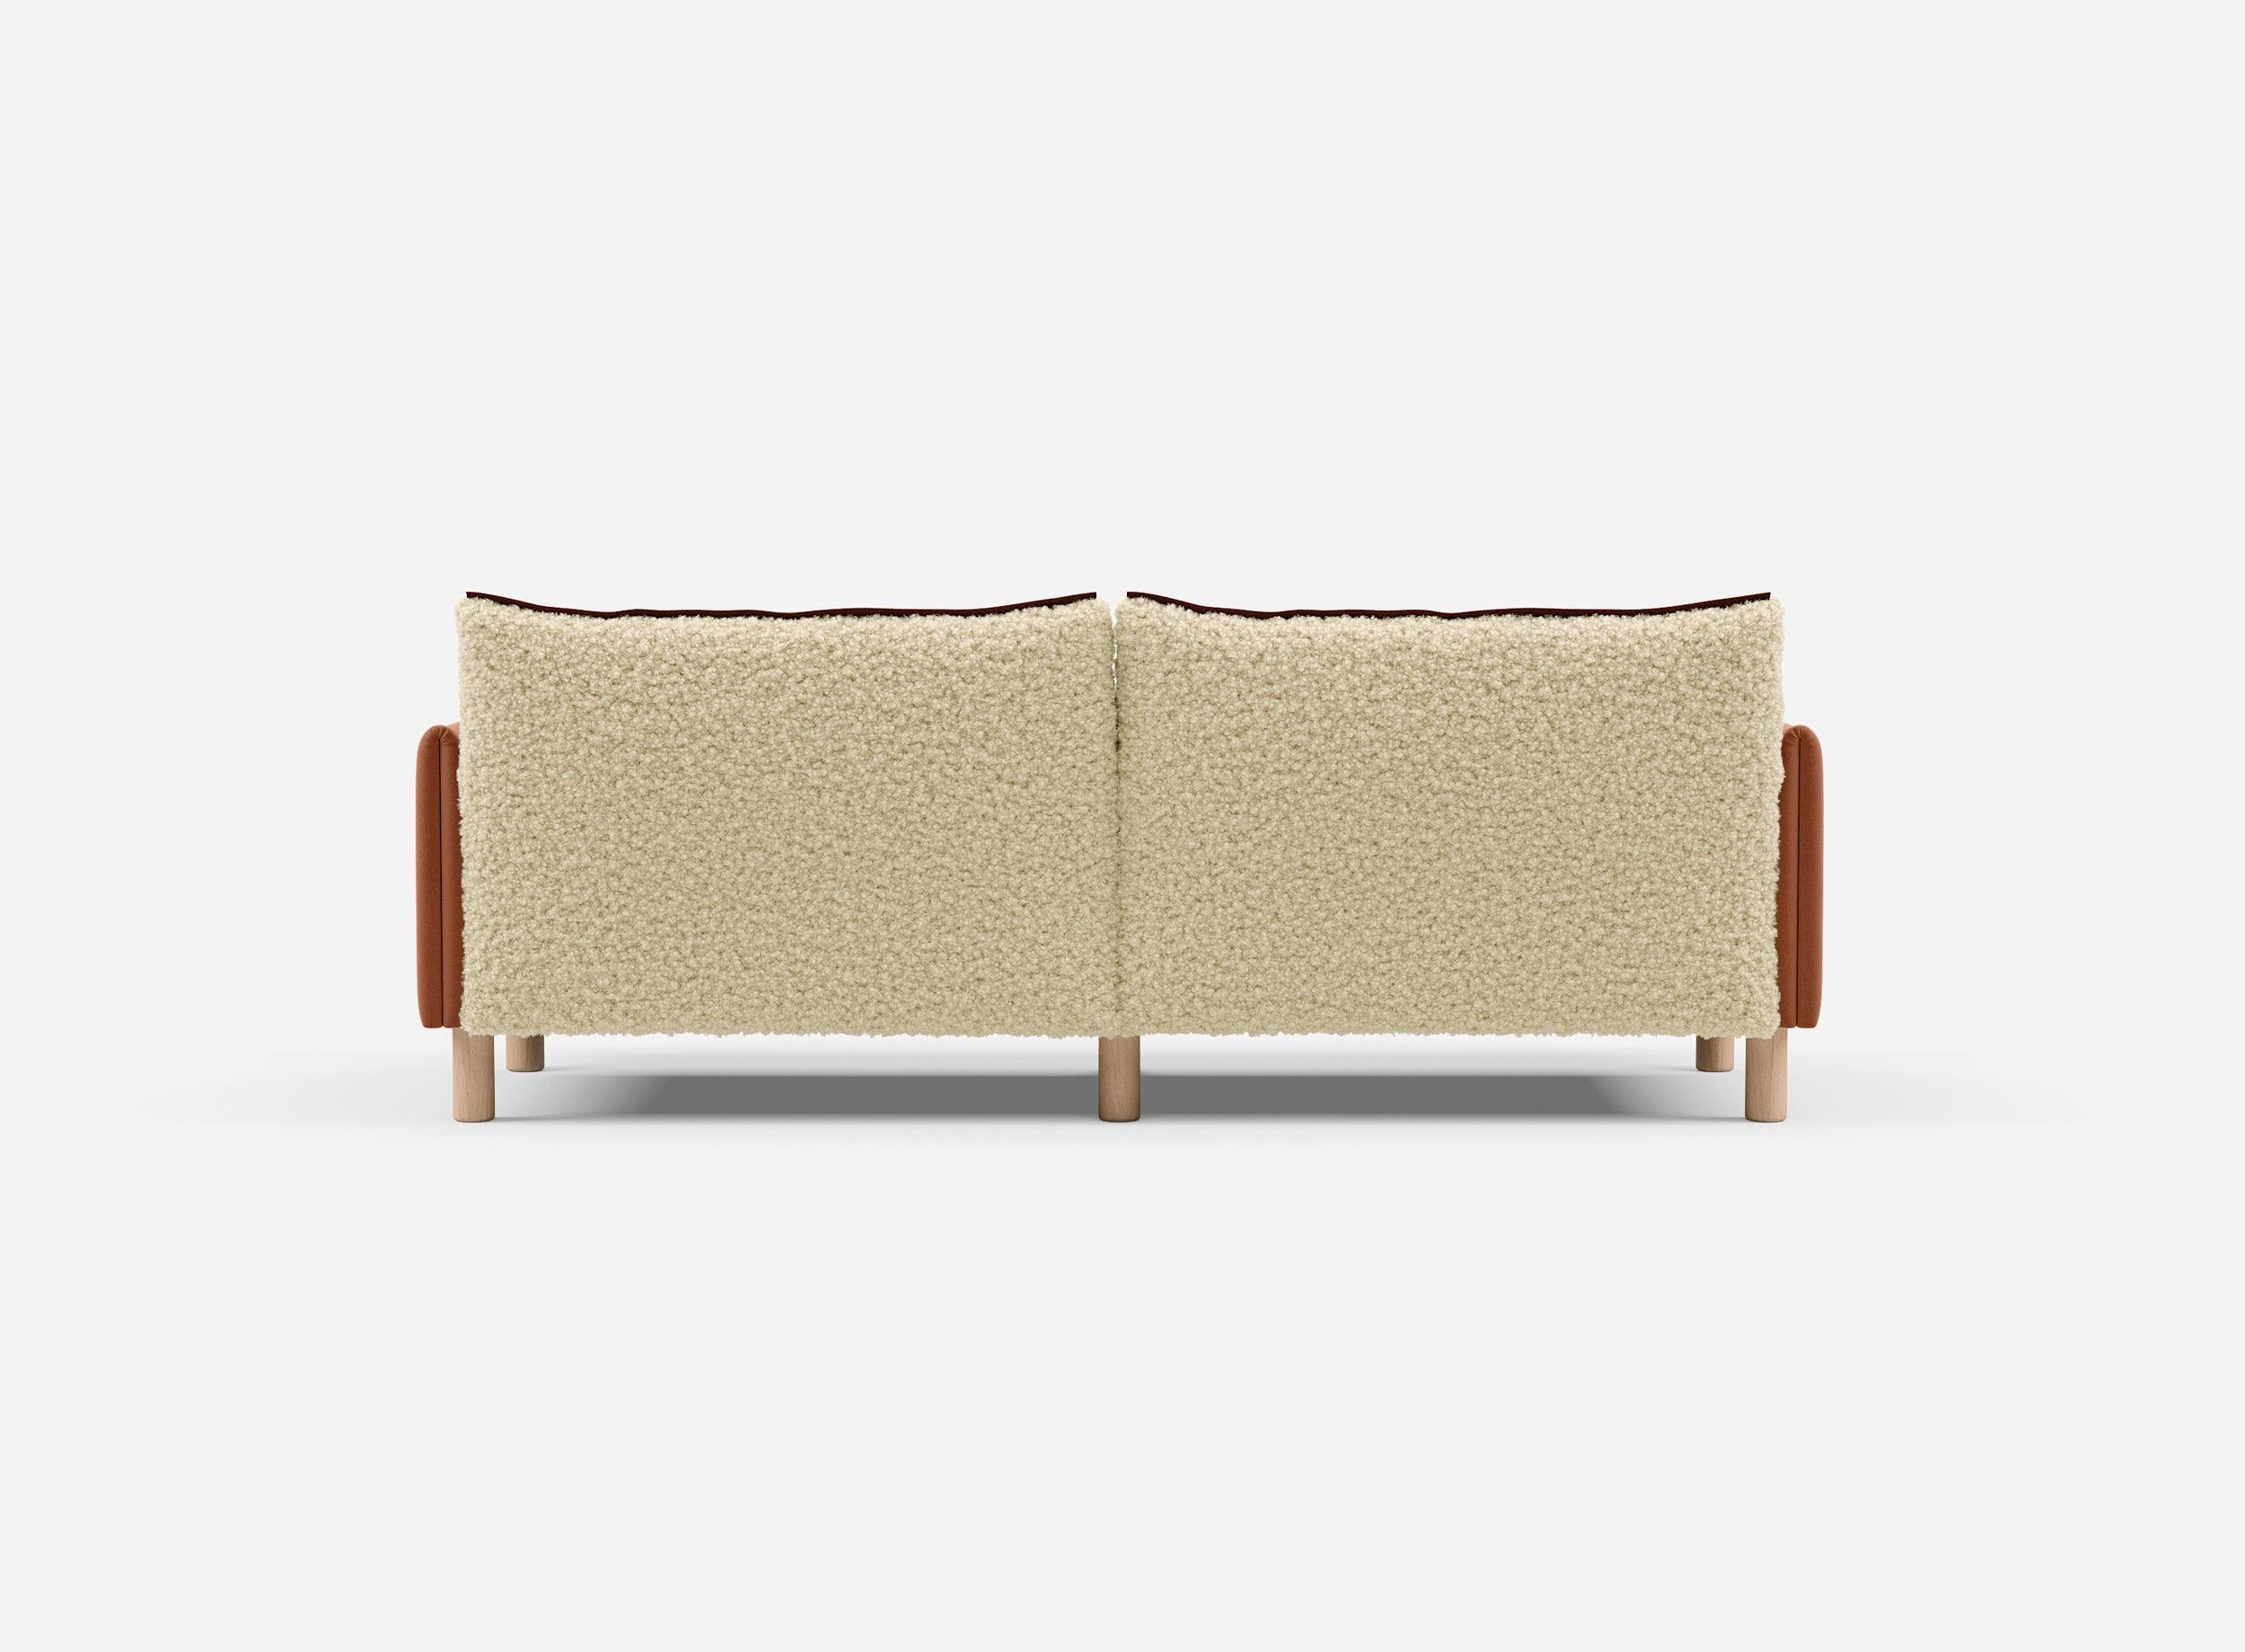 3 Seater Chaise Corner Right Hand Sofa | Cotton Meadow - Cozmo @ Cream Fleece Jacket | Brick Trim